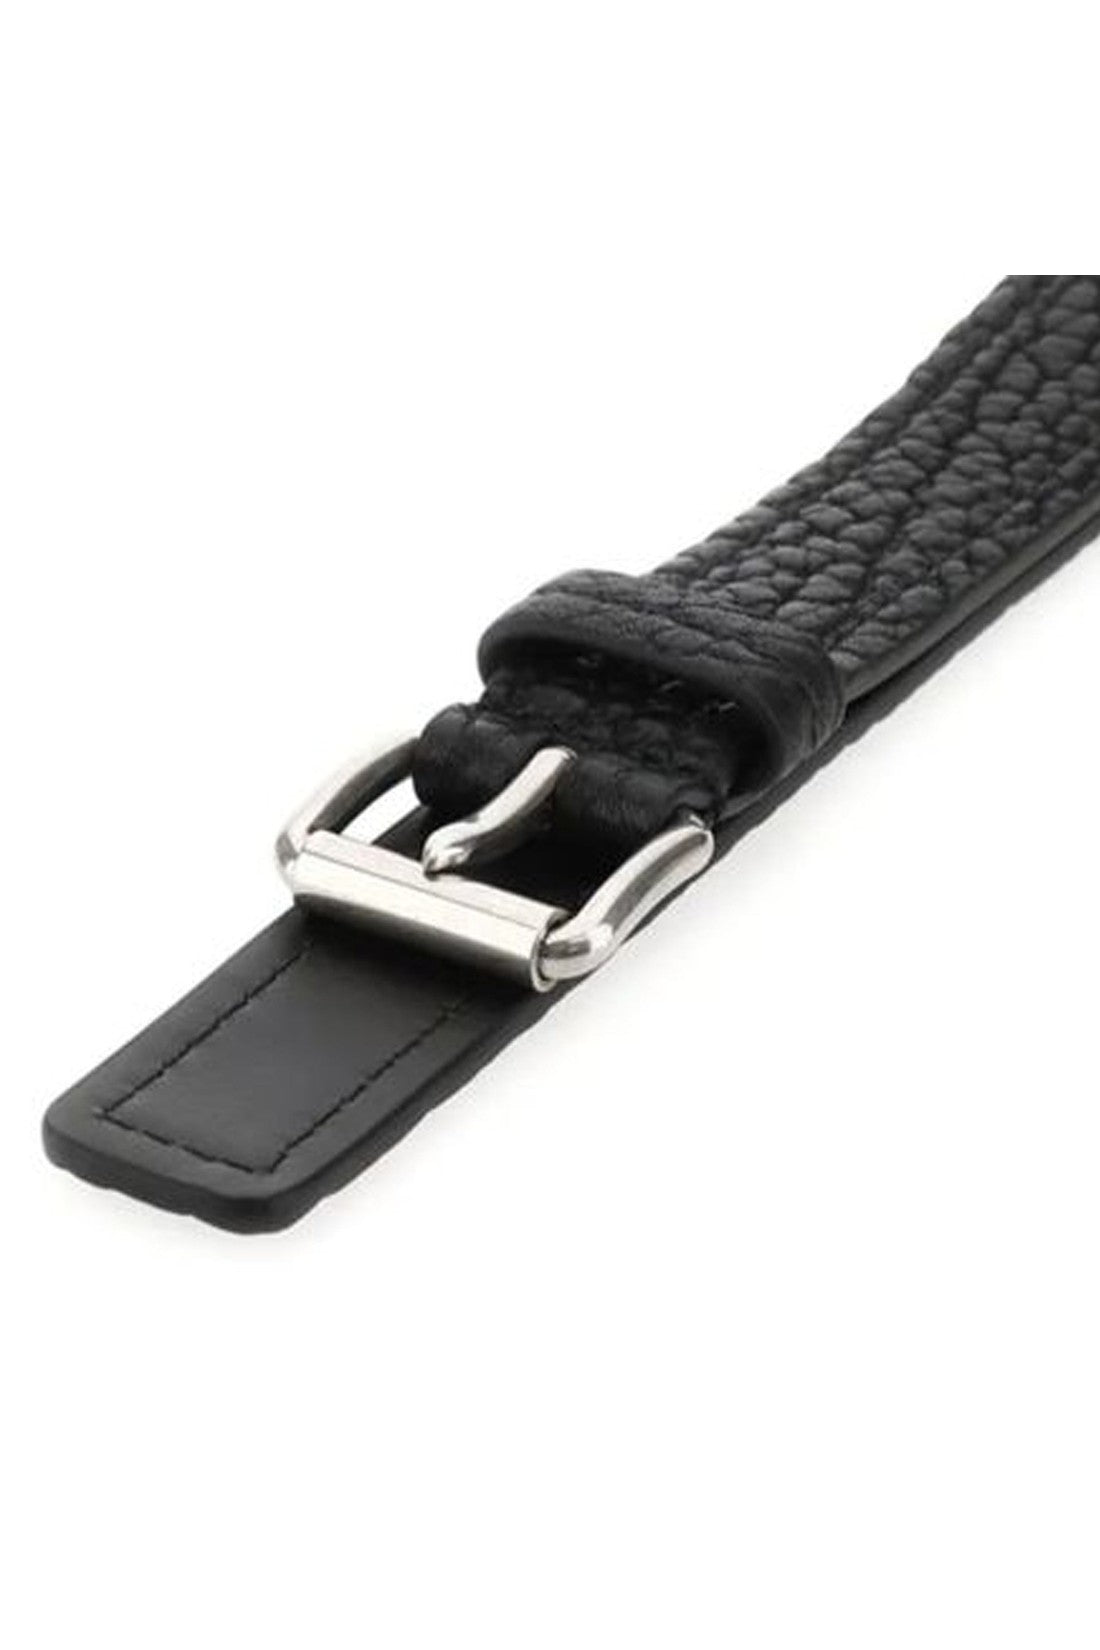 PRADA-Outlet-Sale-PRADA Leather Belt-MEN ACCESSORIES-ARCHIVIST